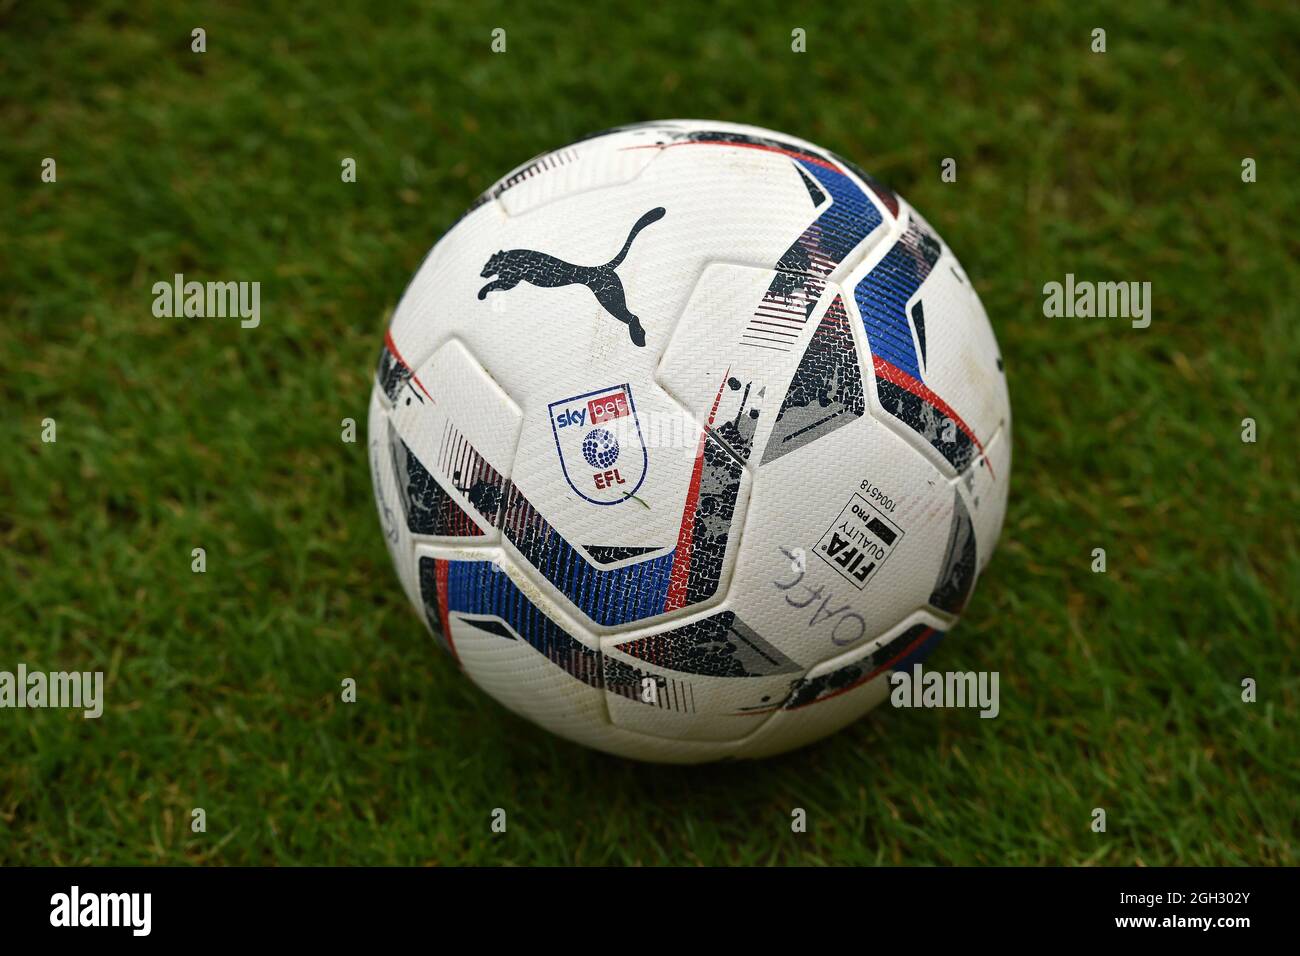 Puma efl football hi-res stock photography and images - Alamy